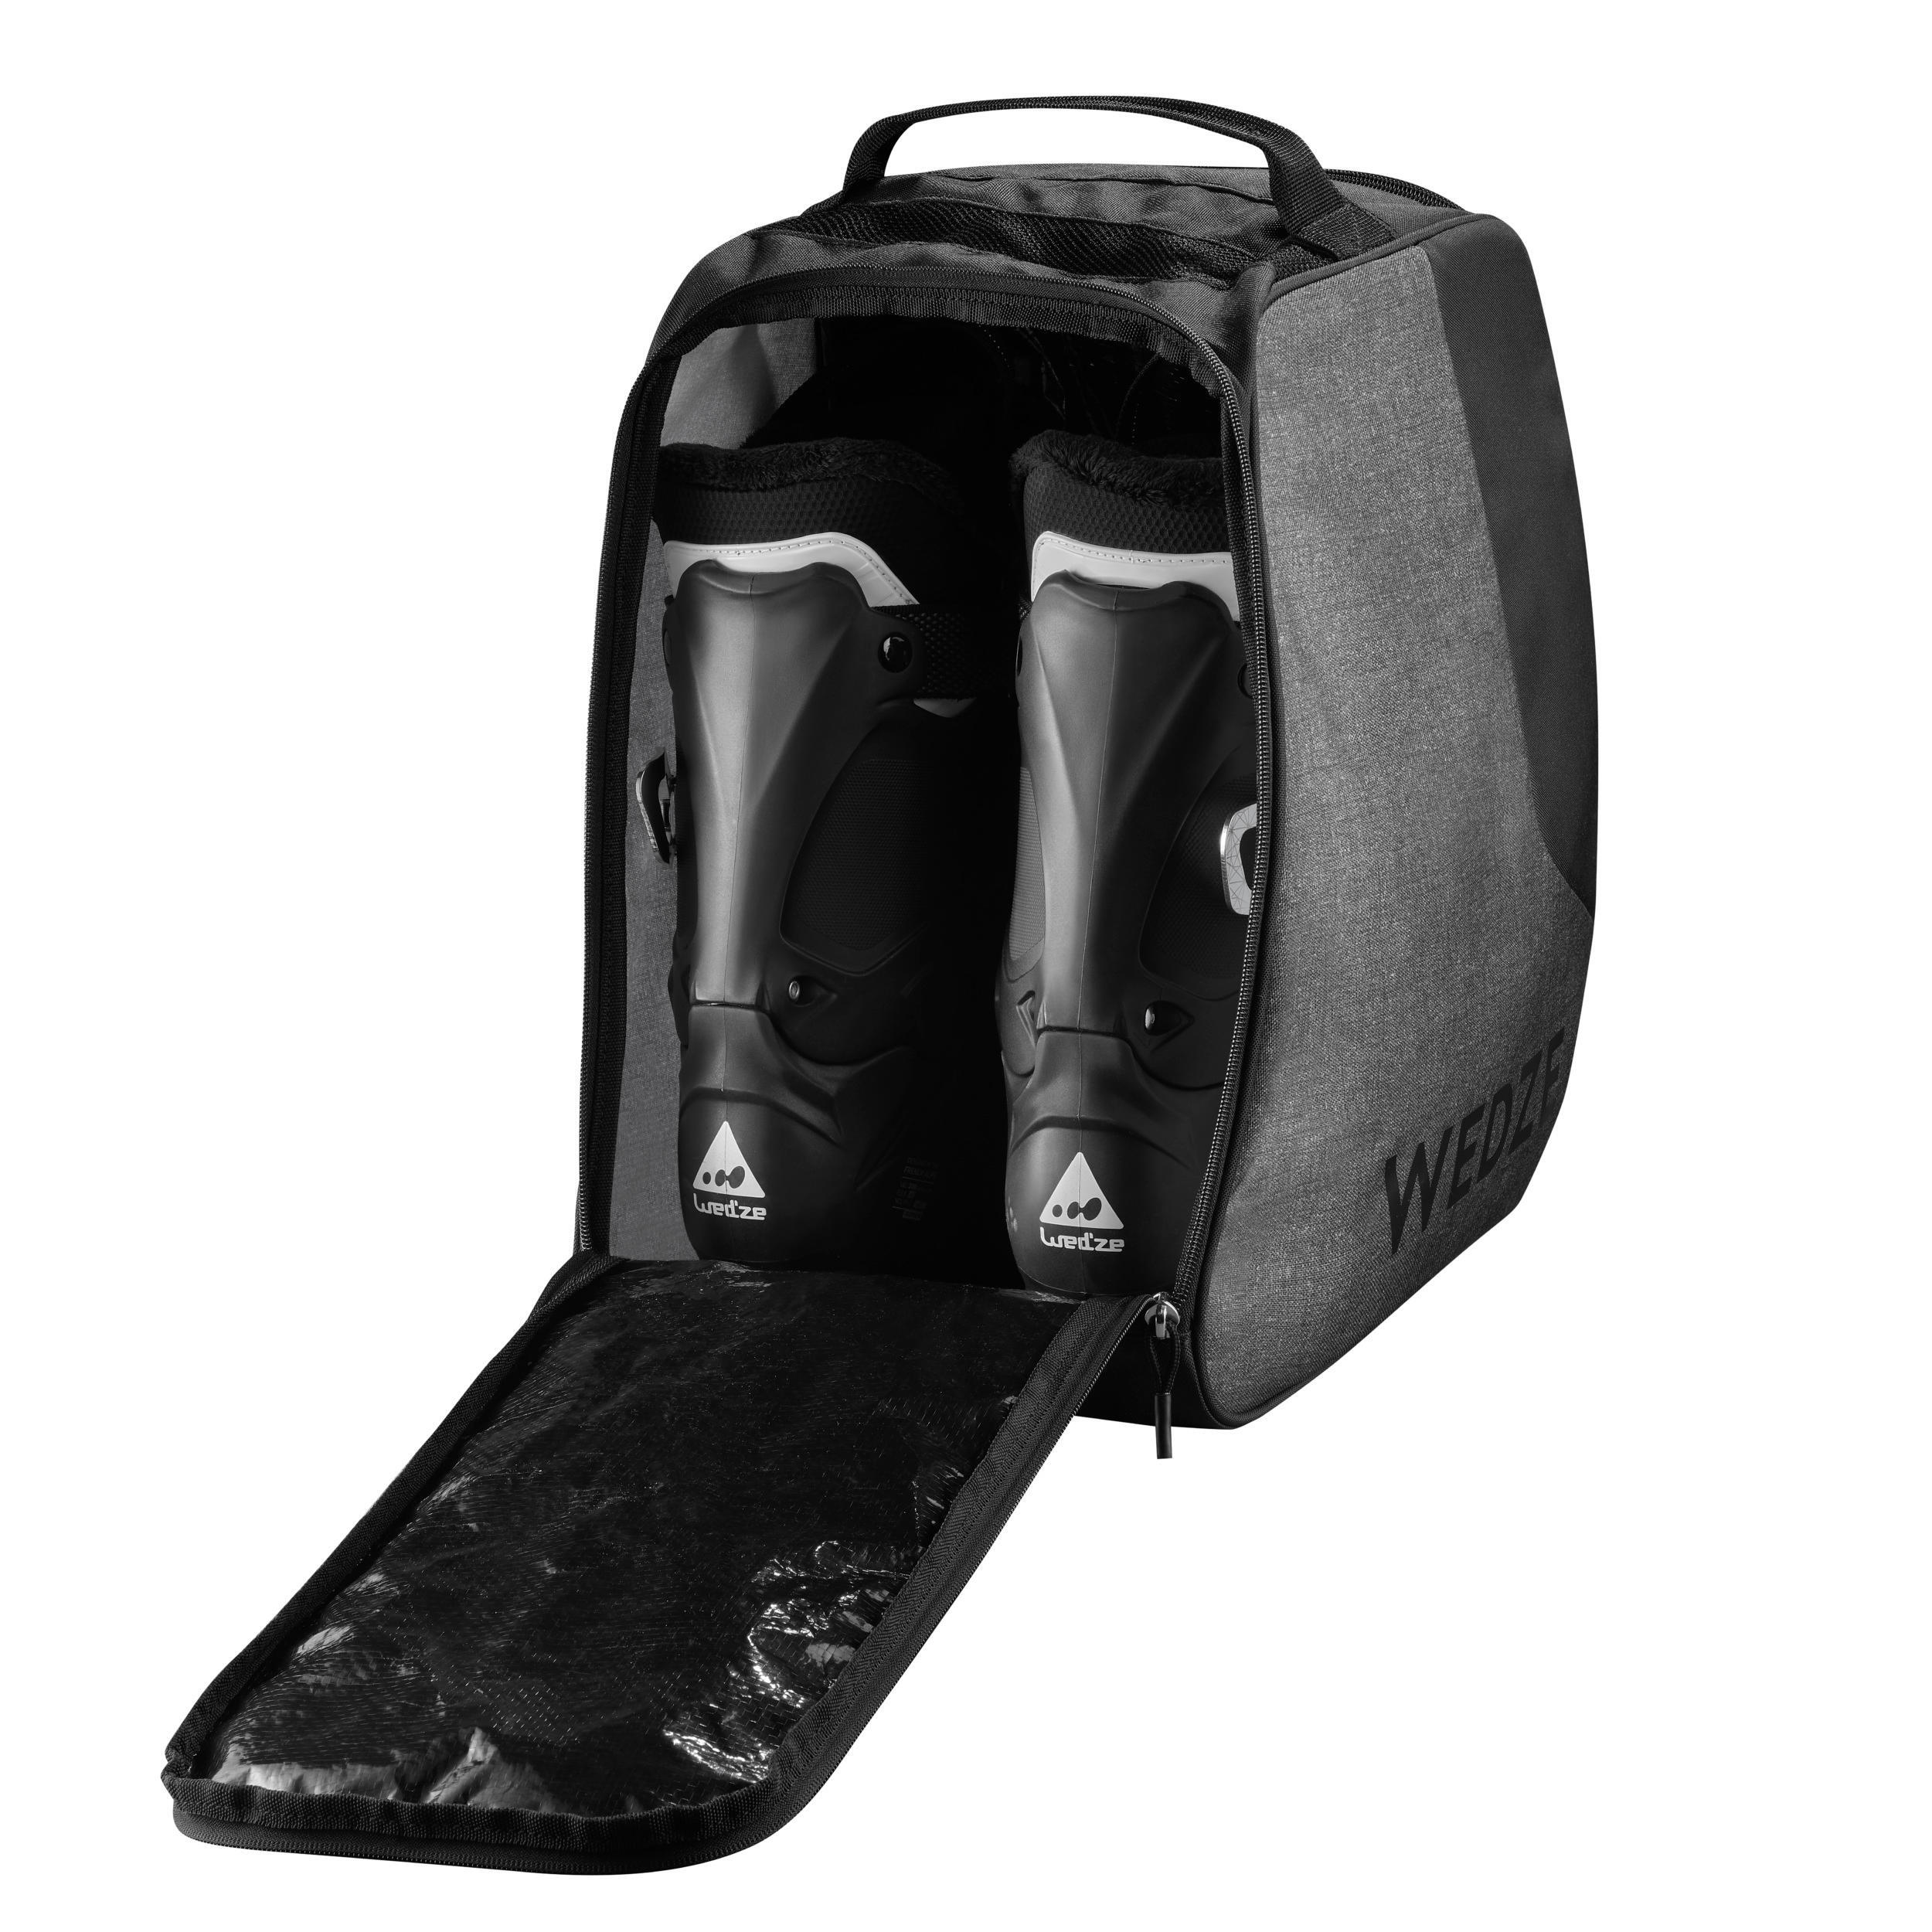 SKI BOOT BAG - 500 - GREY BLACK 4/6